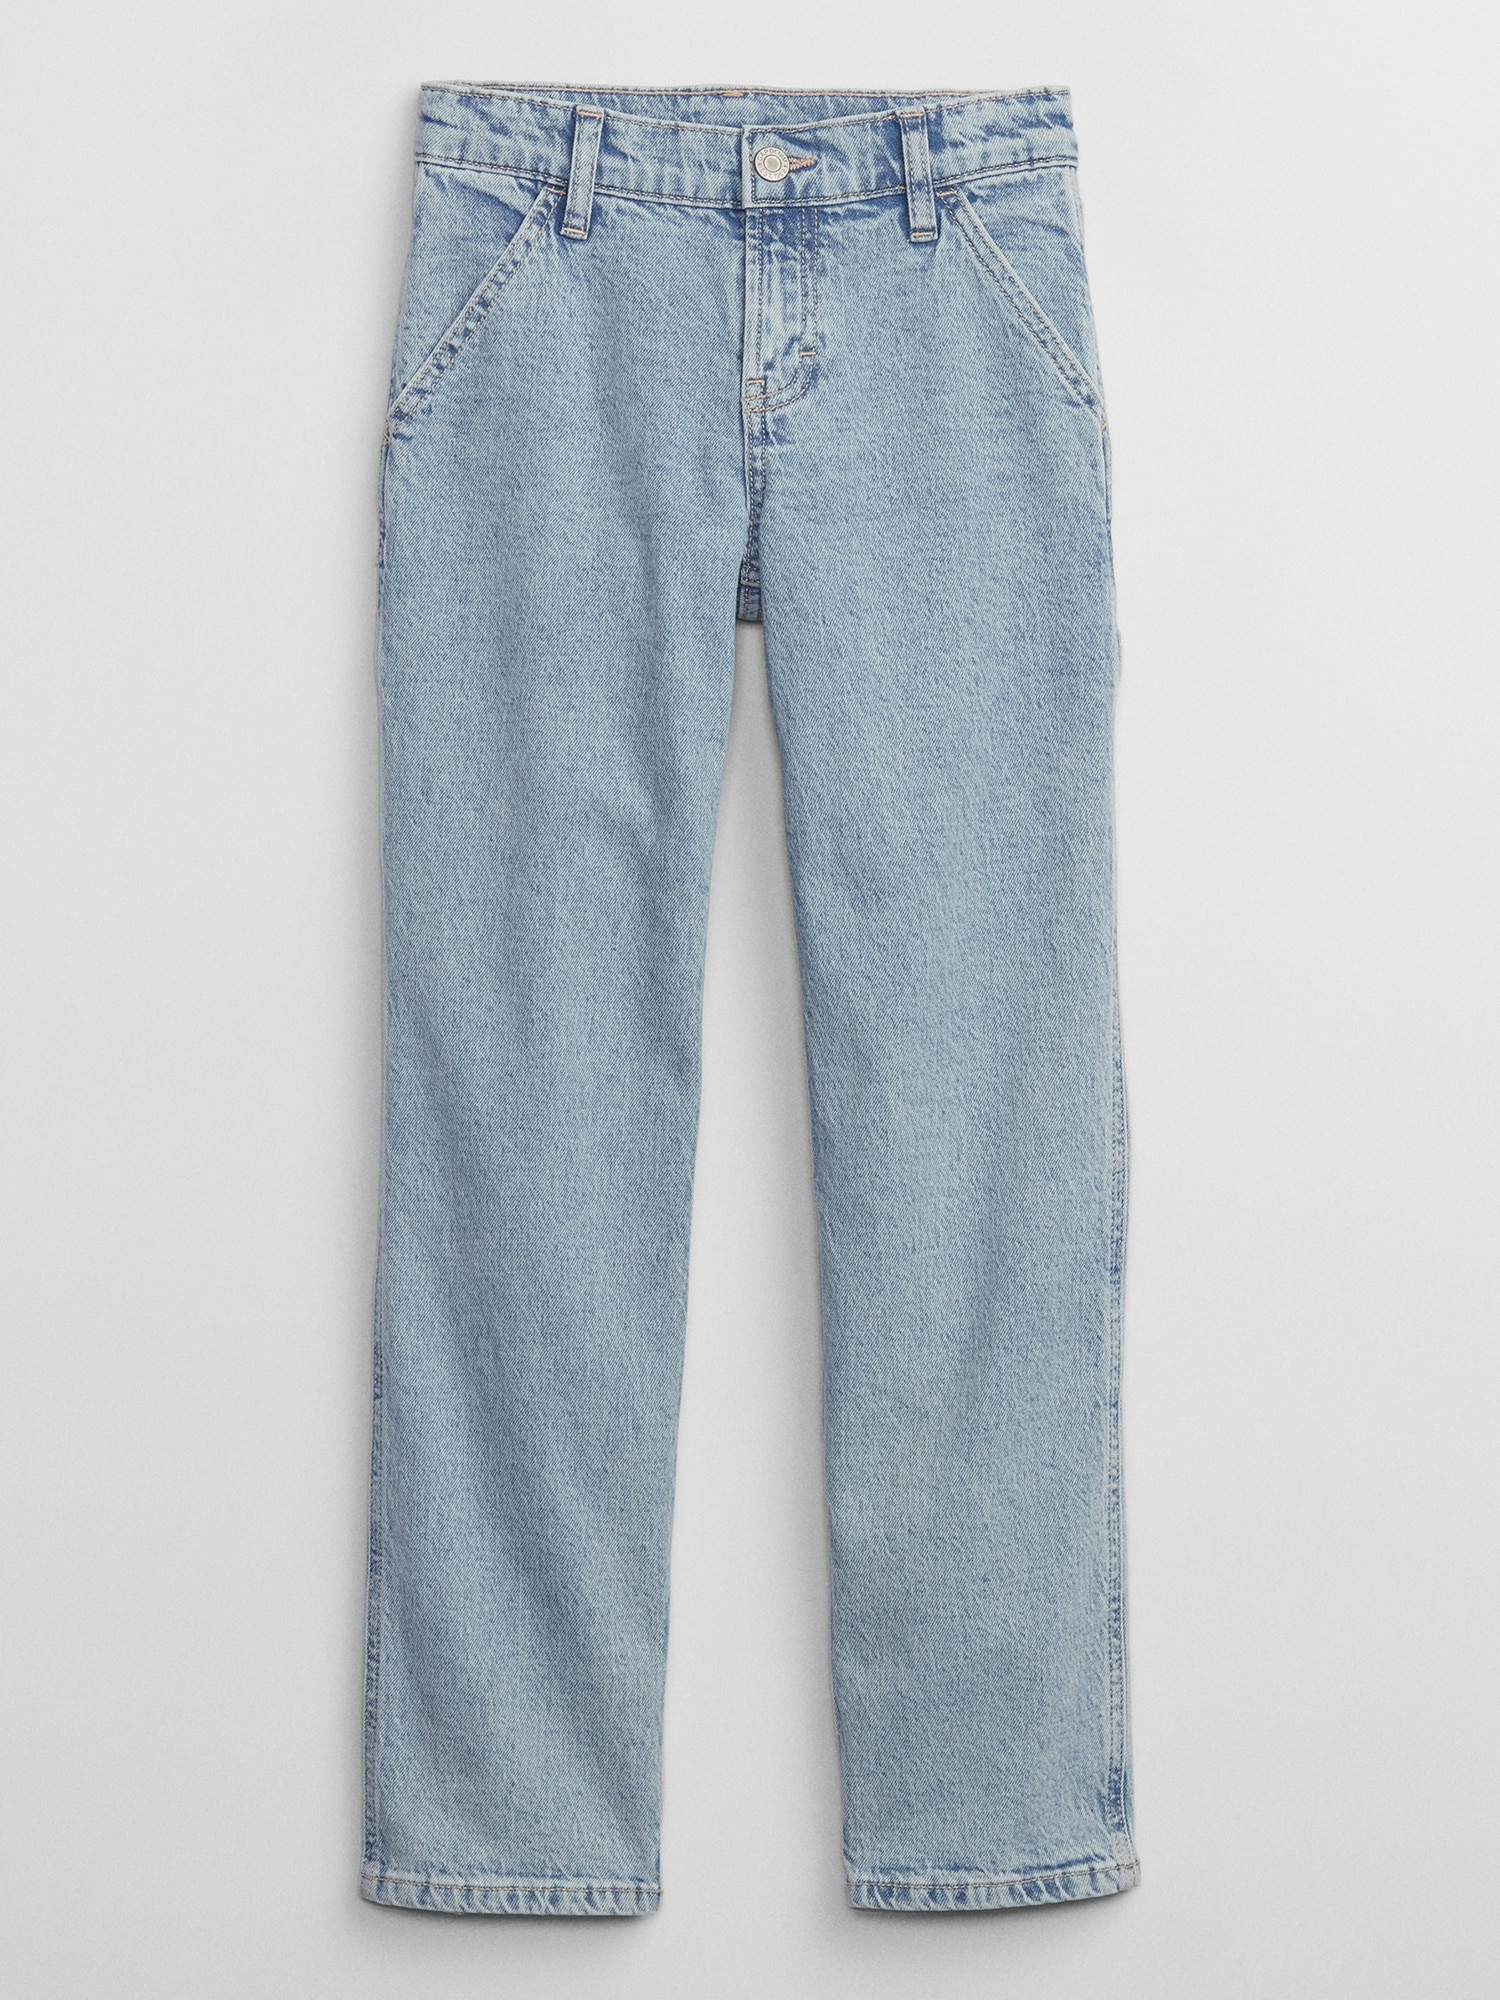 Patch Pocket Jeans | Gap Factory